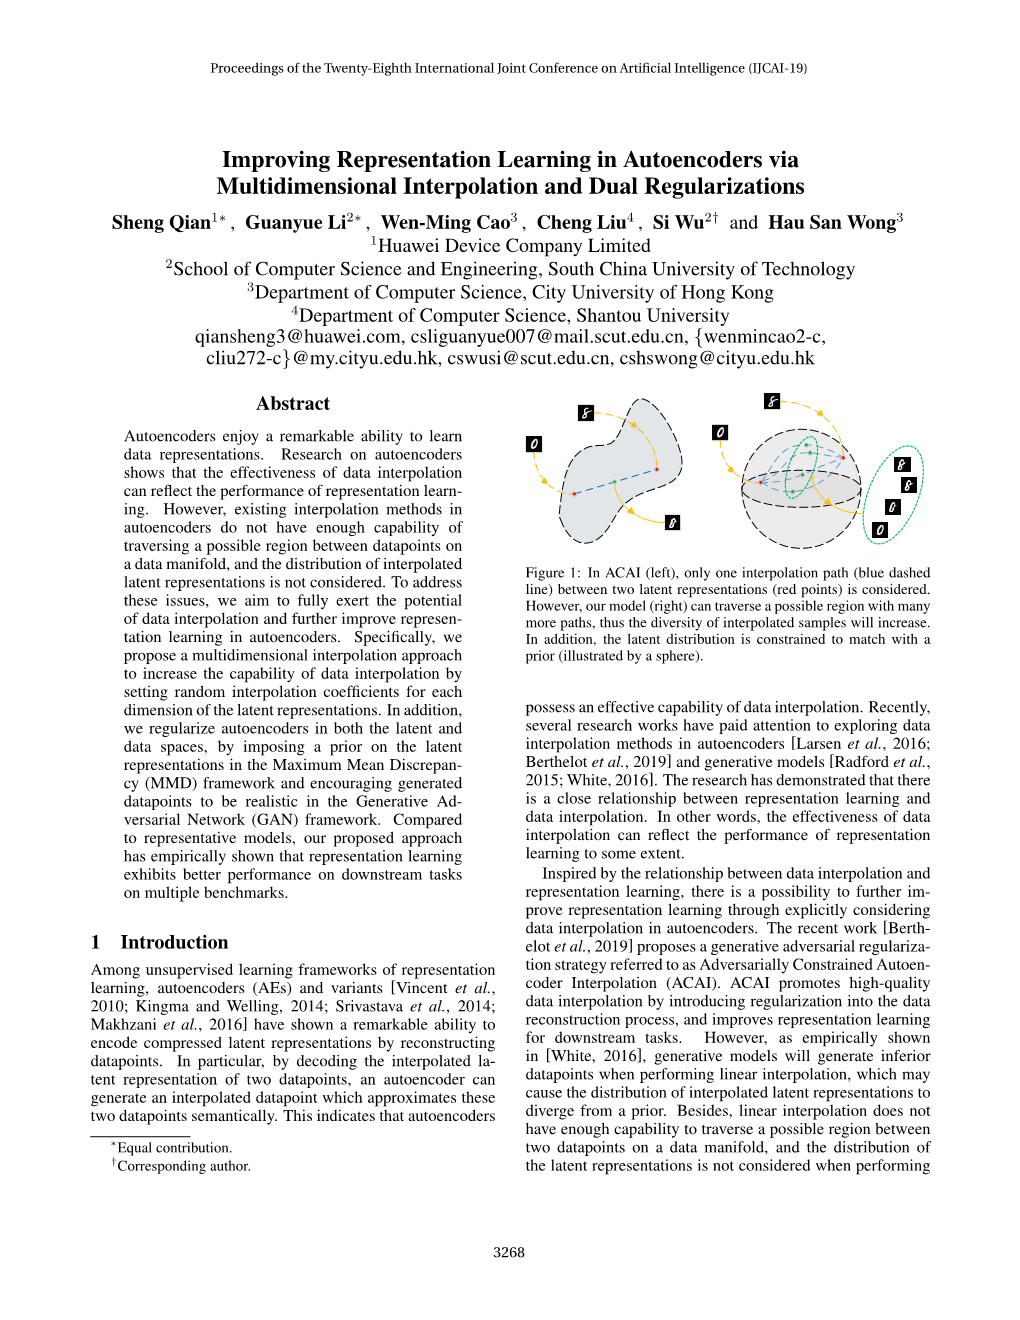 Improving Representation Learning in Autoencoders Via Multidimensional Interpolation and Dual Regularizations